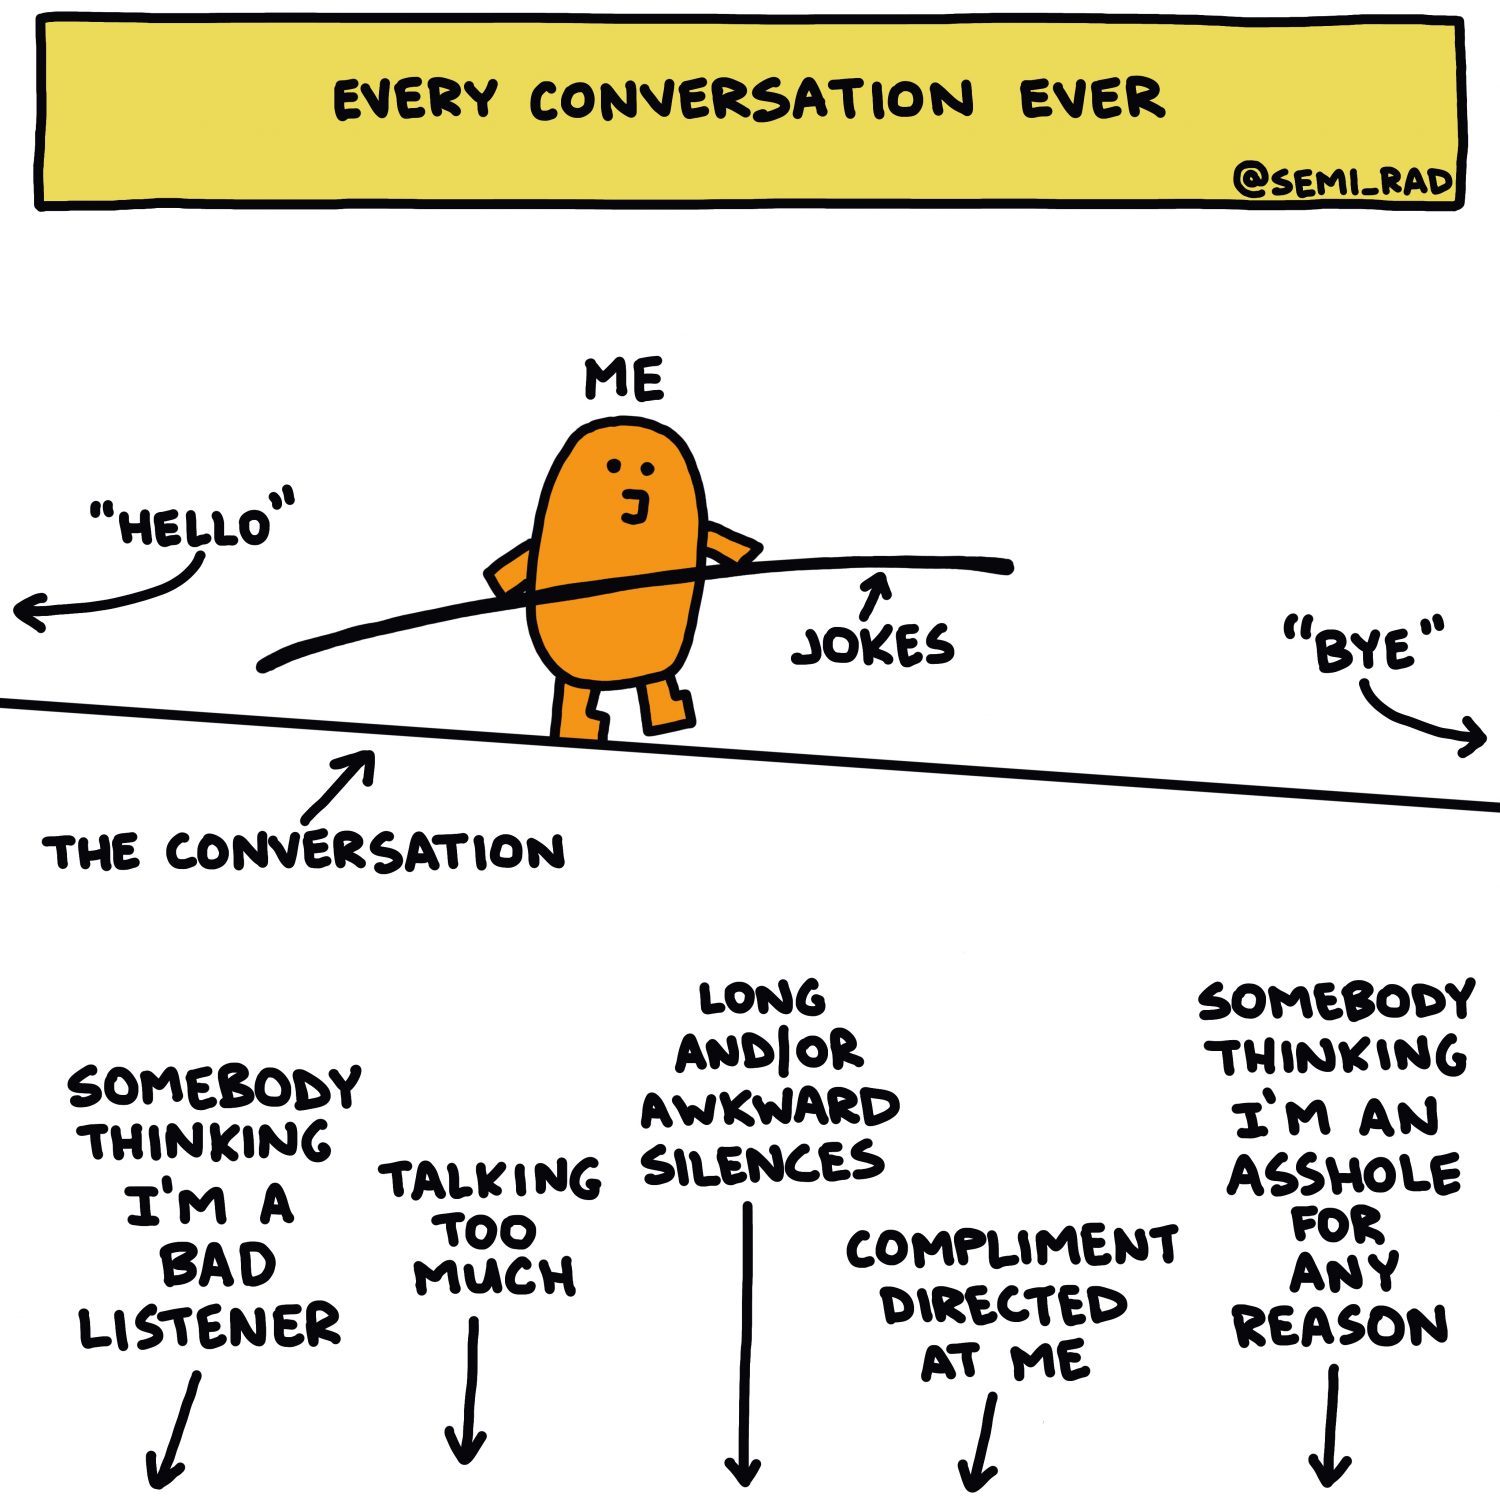 semi-rad illustration: Every conversation ever